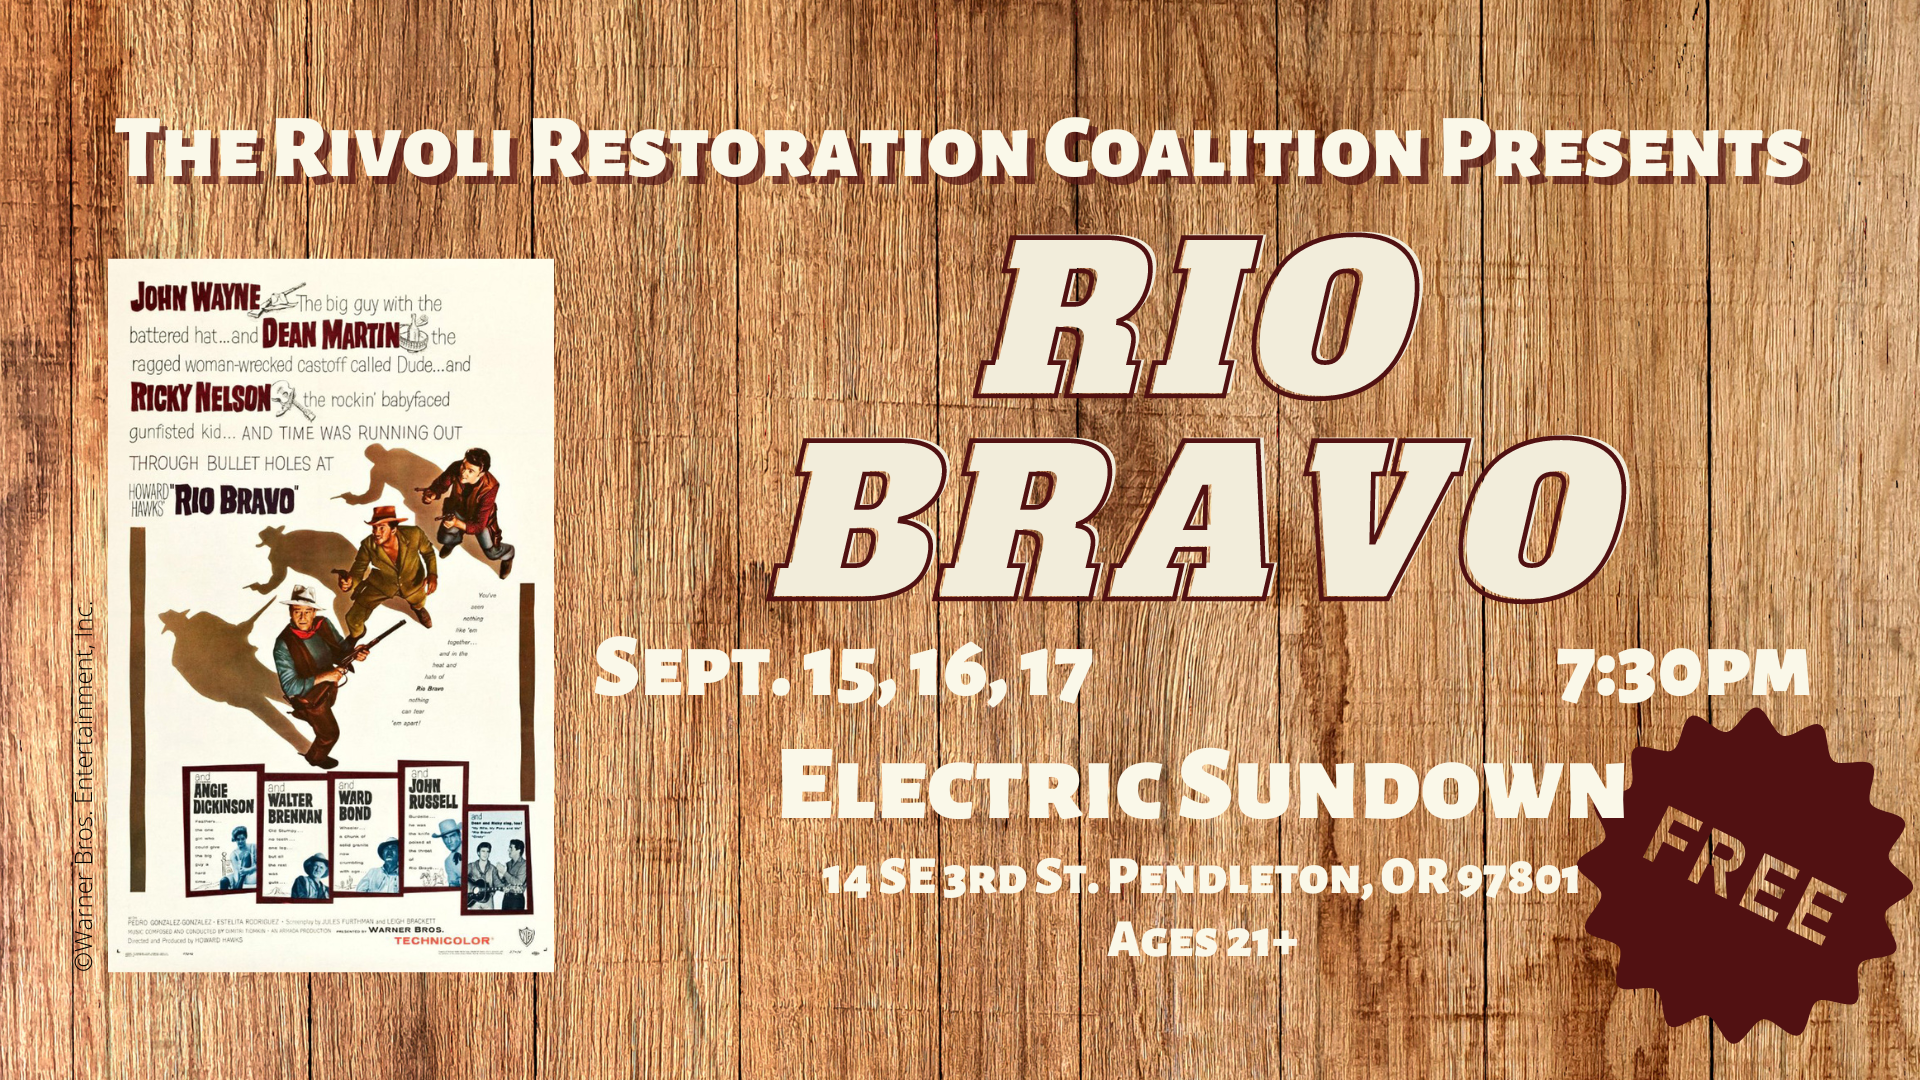 An image reading: "The Rivoli Restoration Coalition Presents Rio Bravo, Sept. 15, 16, 17, 7:30pm at Electric Sundown, 14 SE 3rd St., Ages 21+)